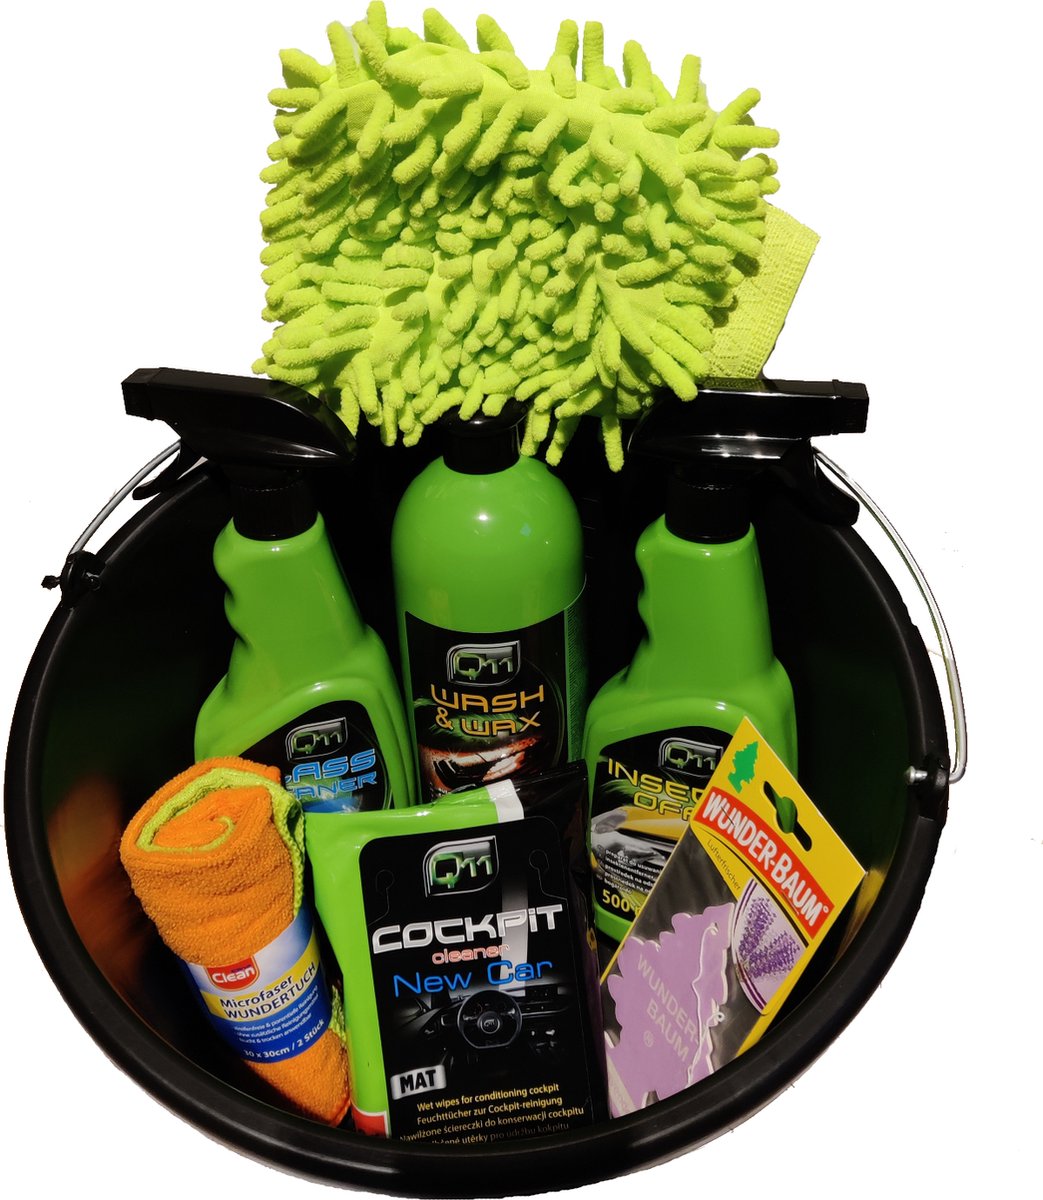 Autowas voordeel pakket - Reiniging set - Auto wassen - Exterieur - Interieur - Auto shampoo - Emmer